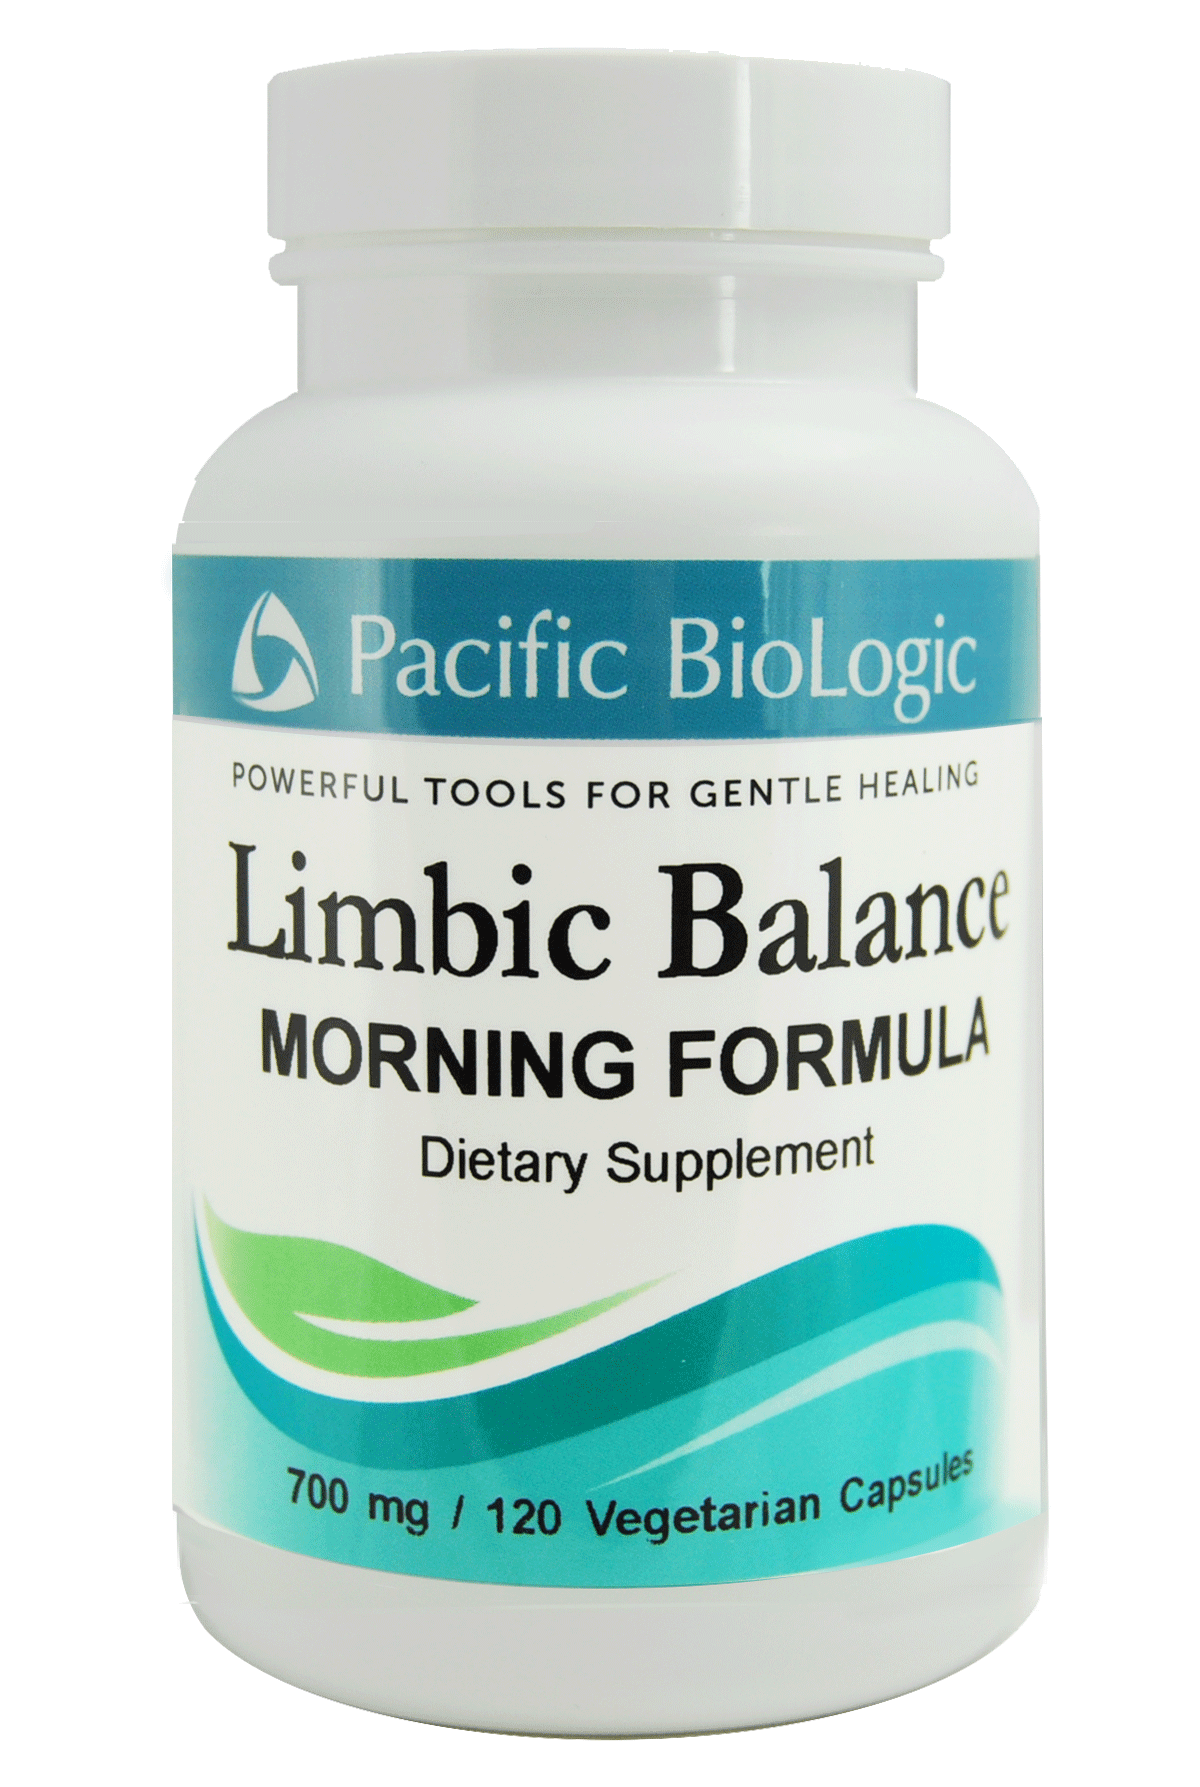 Limbic Balance Morning Formula